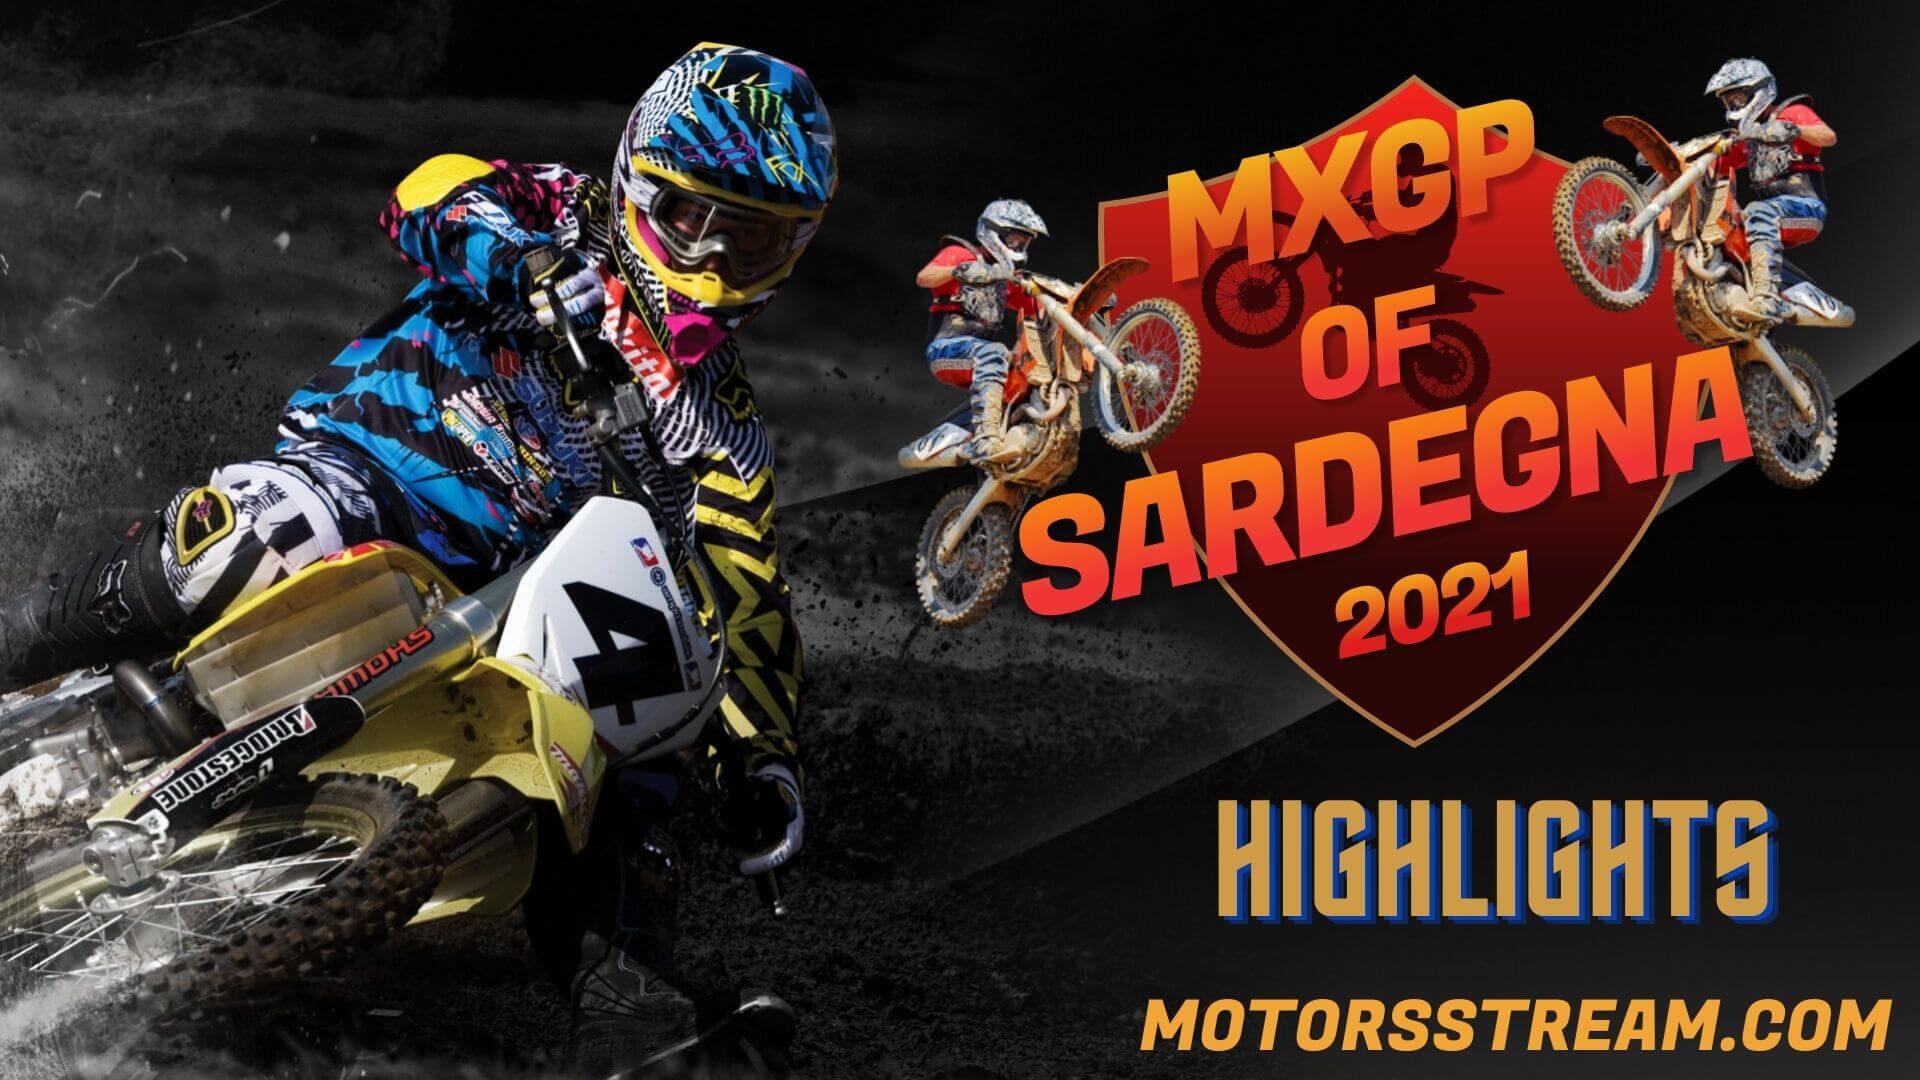 FIM Motocross Sardegna Highlights 2021 MXGP